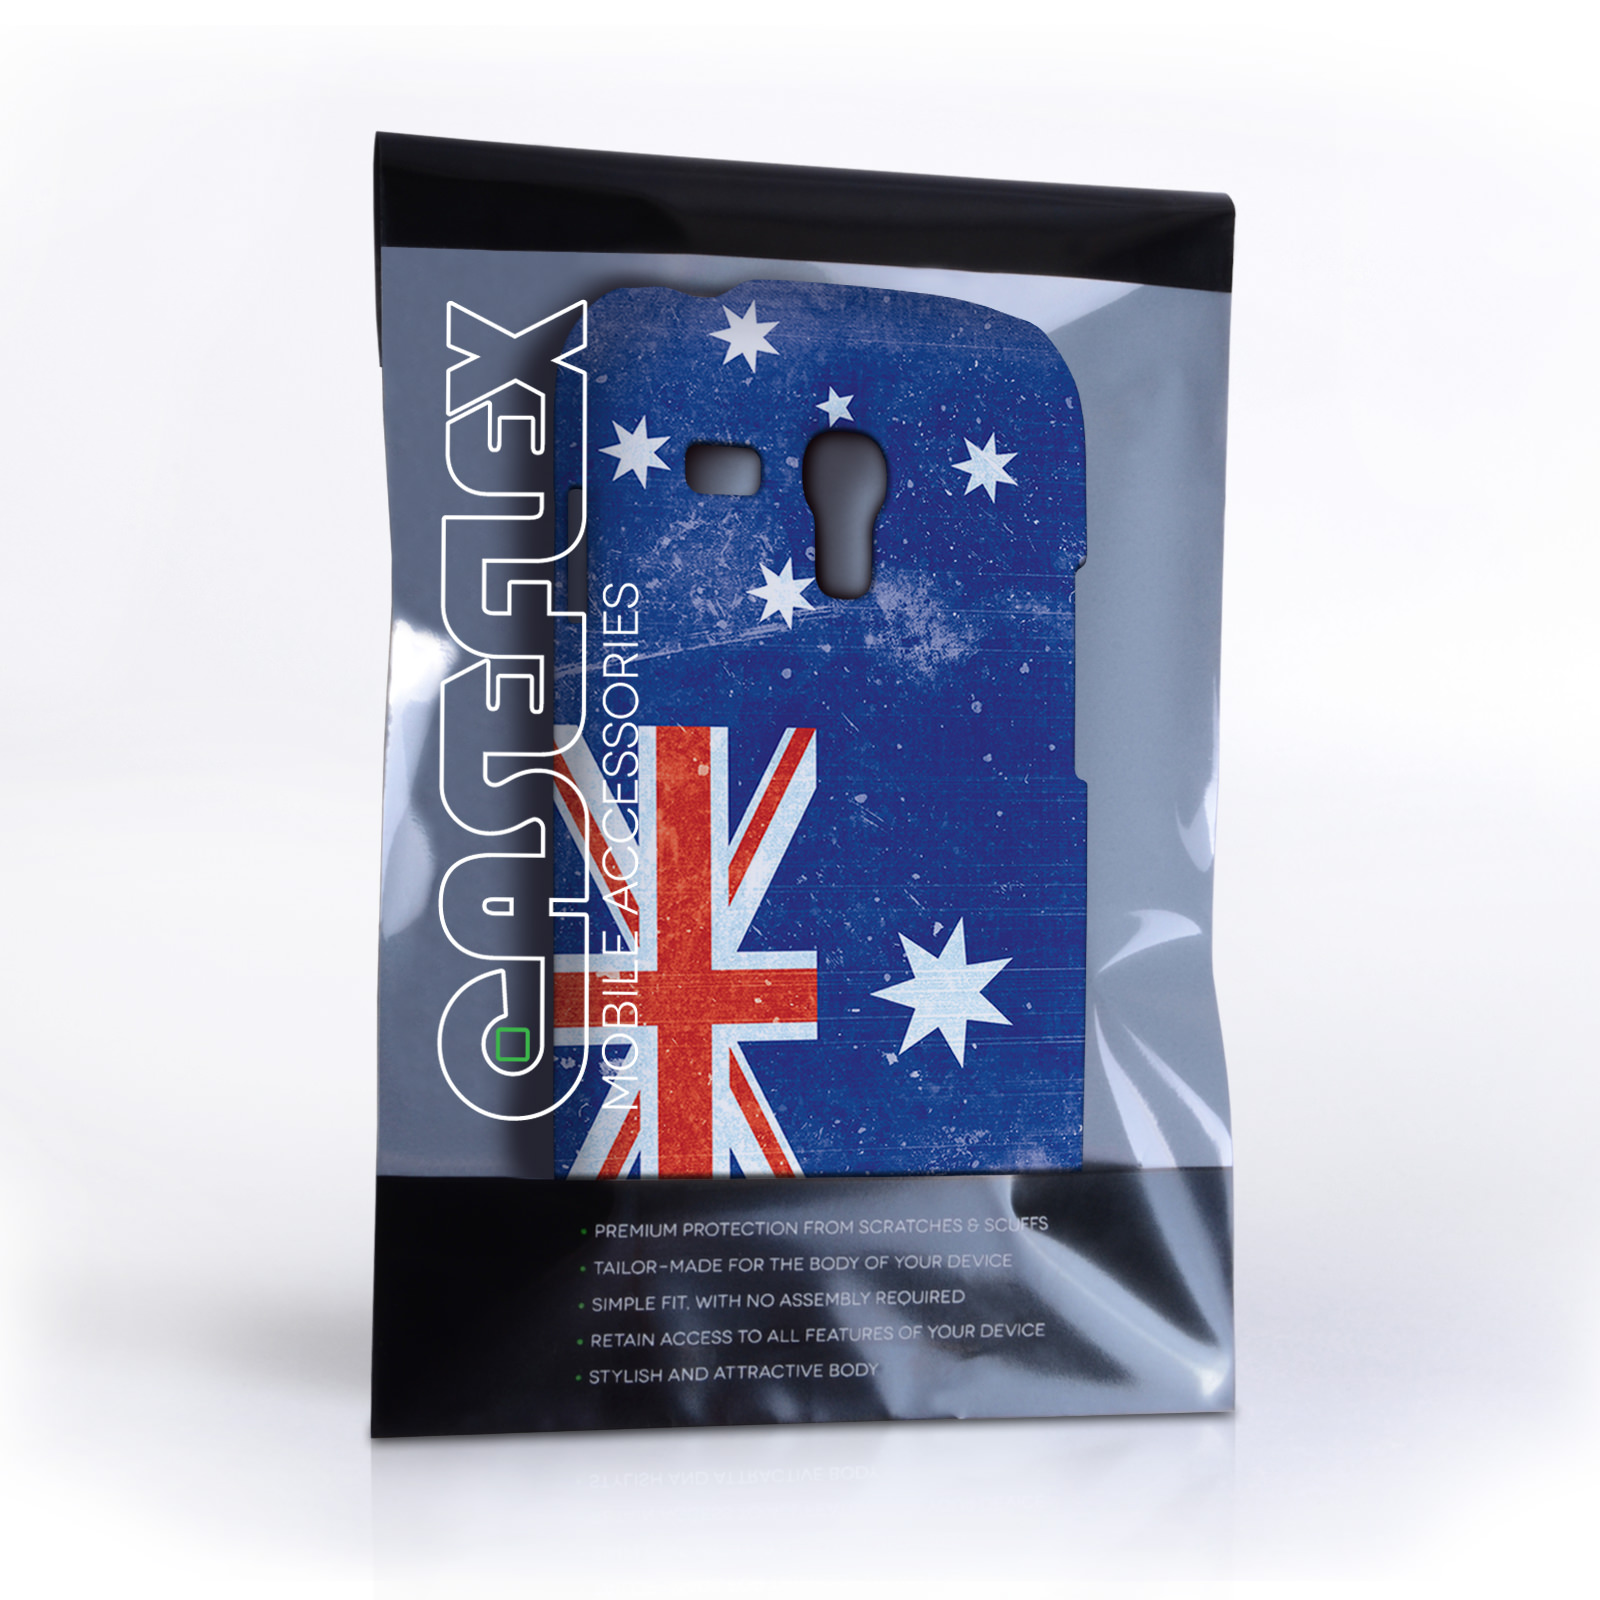 Caseflex Samsung Galaxy S3 Mini Retro Australia Flag Case